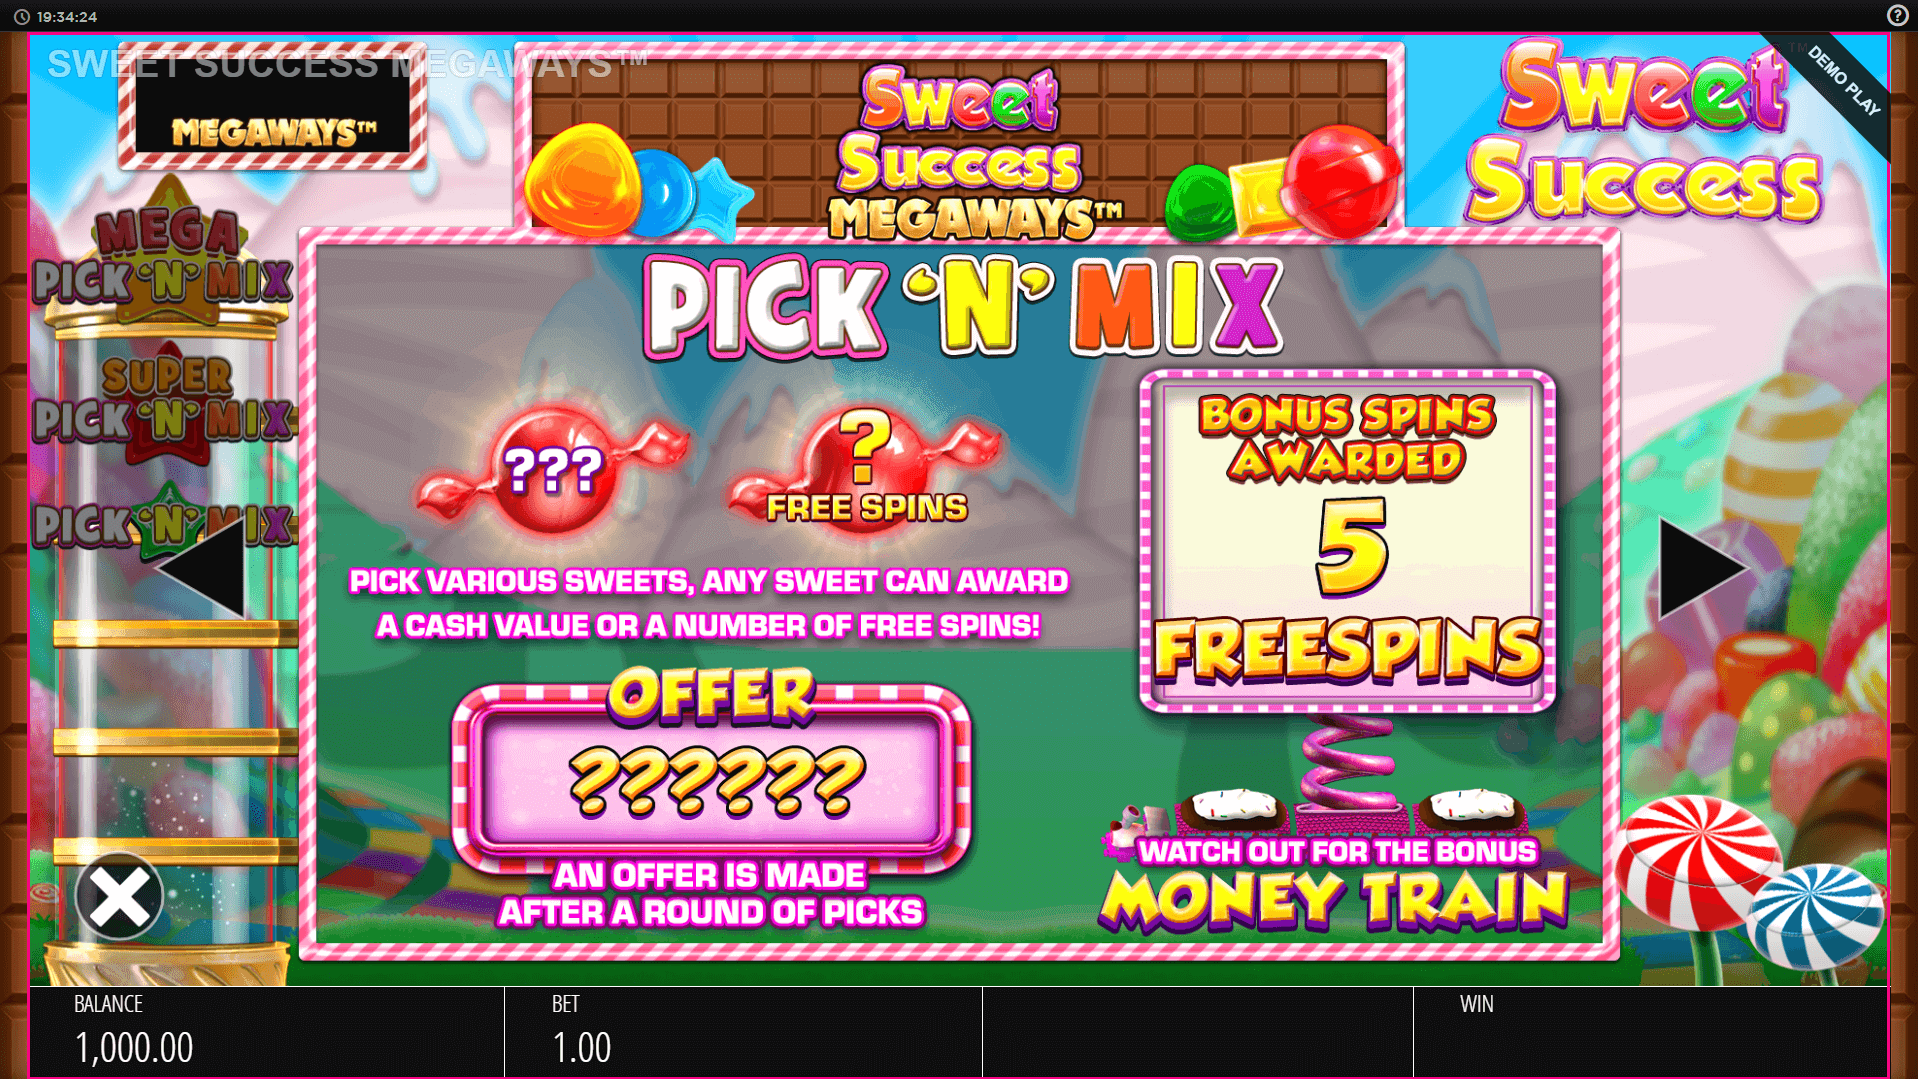 Sweet Success Megaways Slot Machine ᗎ Play FREE Casino Game Online by